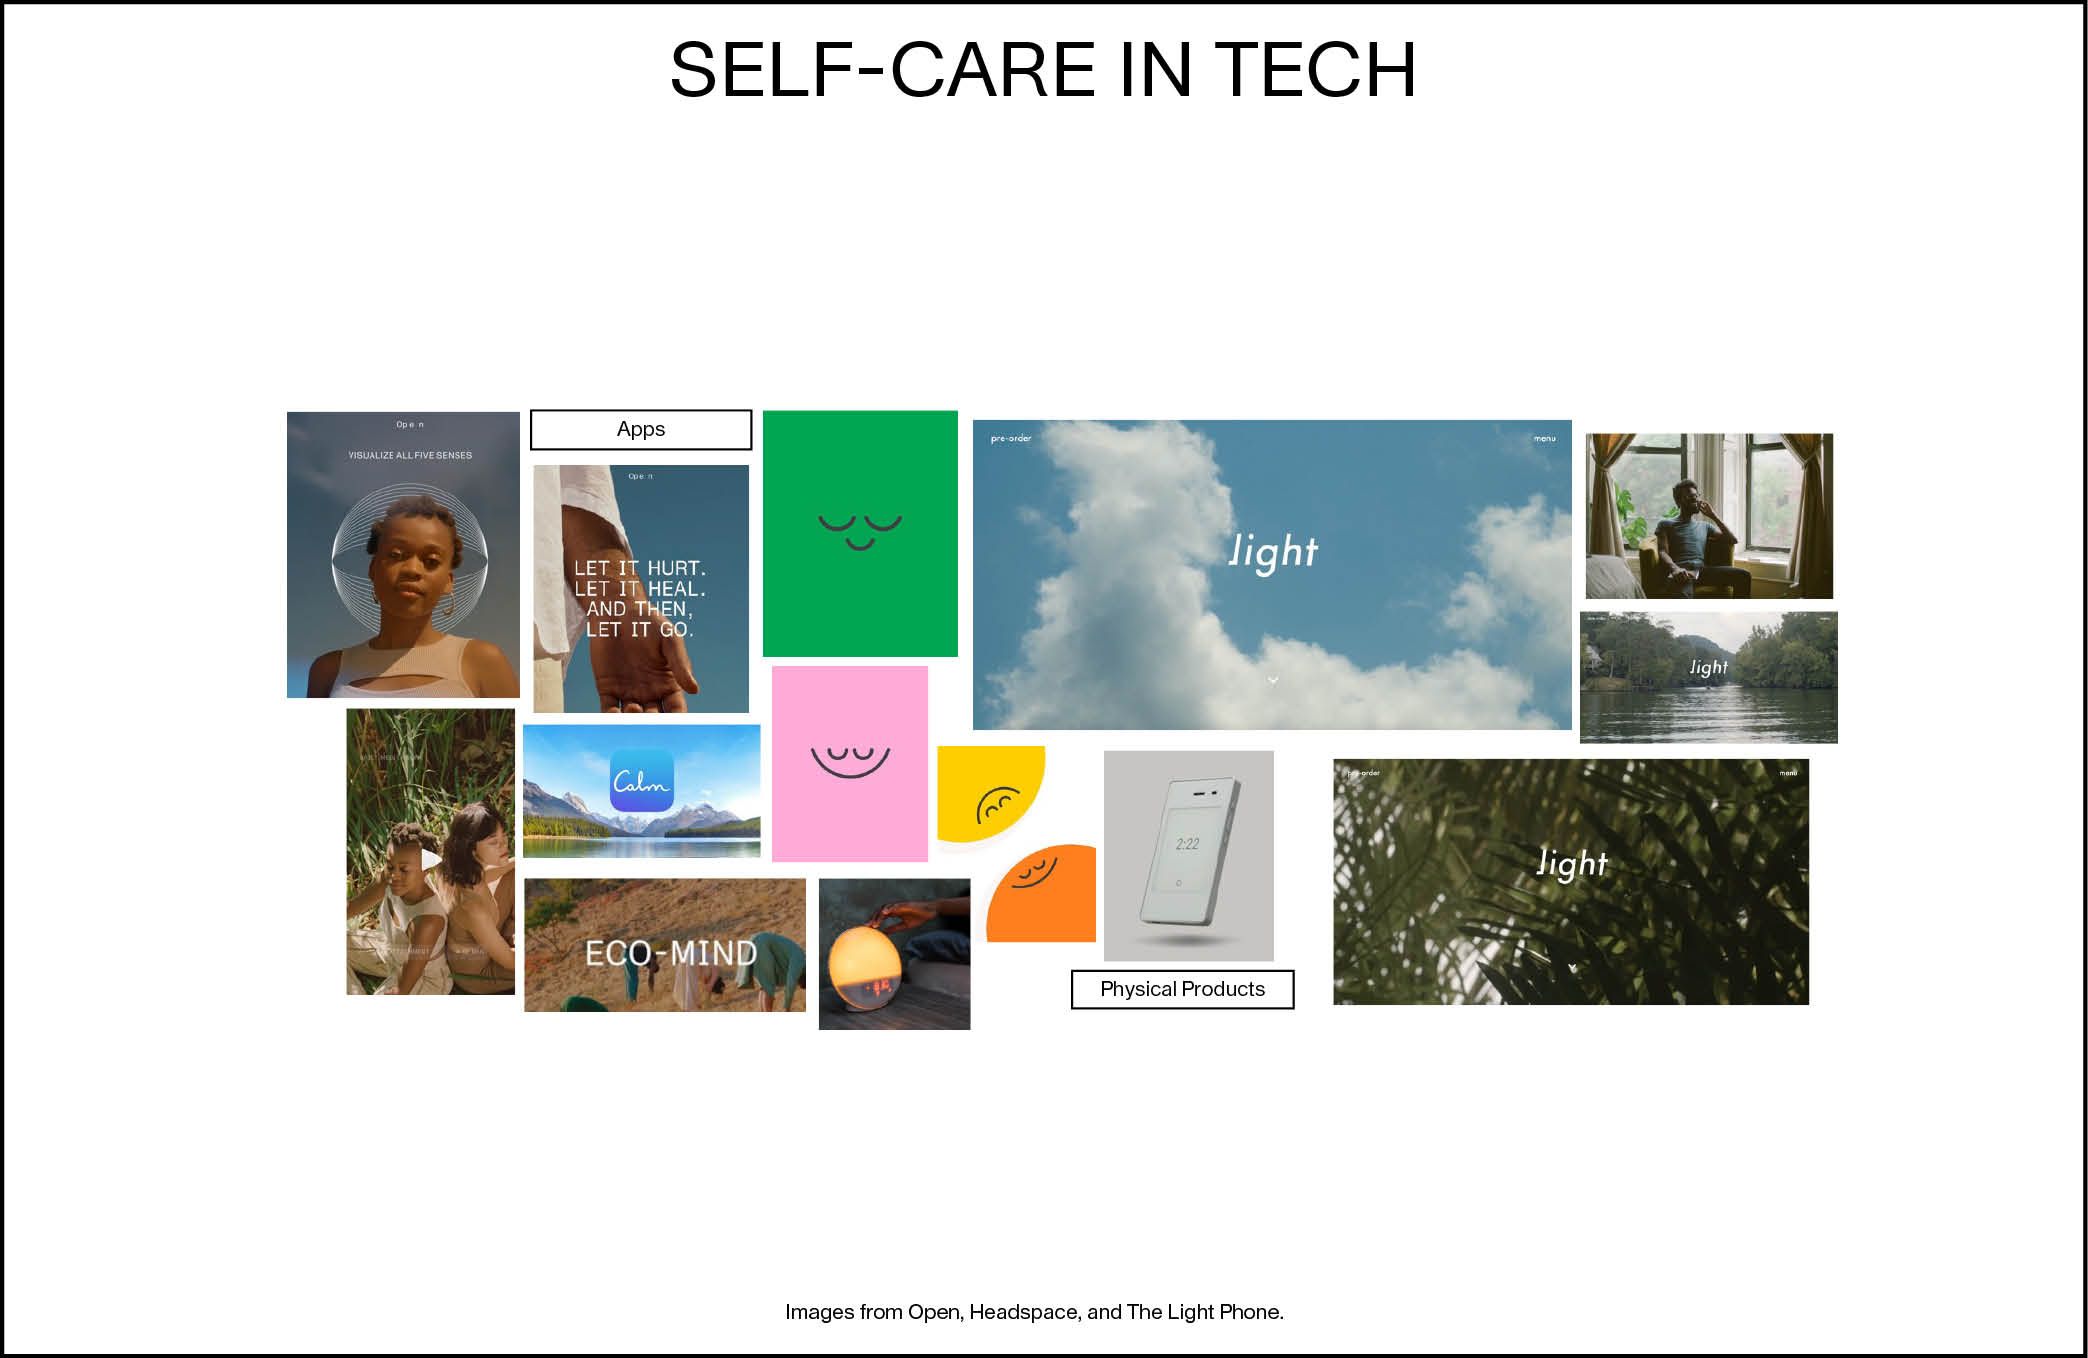 Self-care in Tech